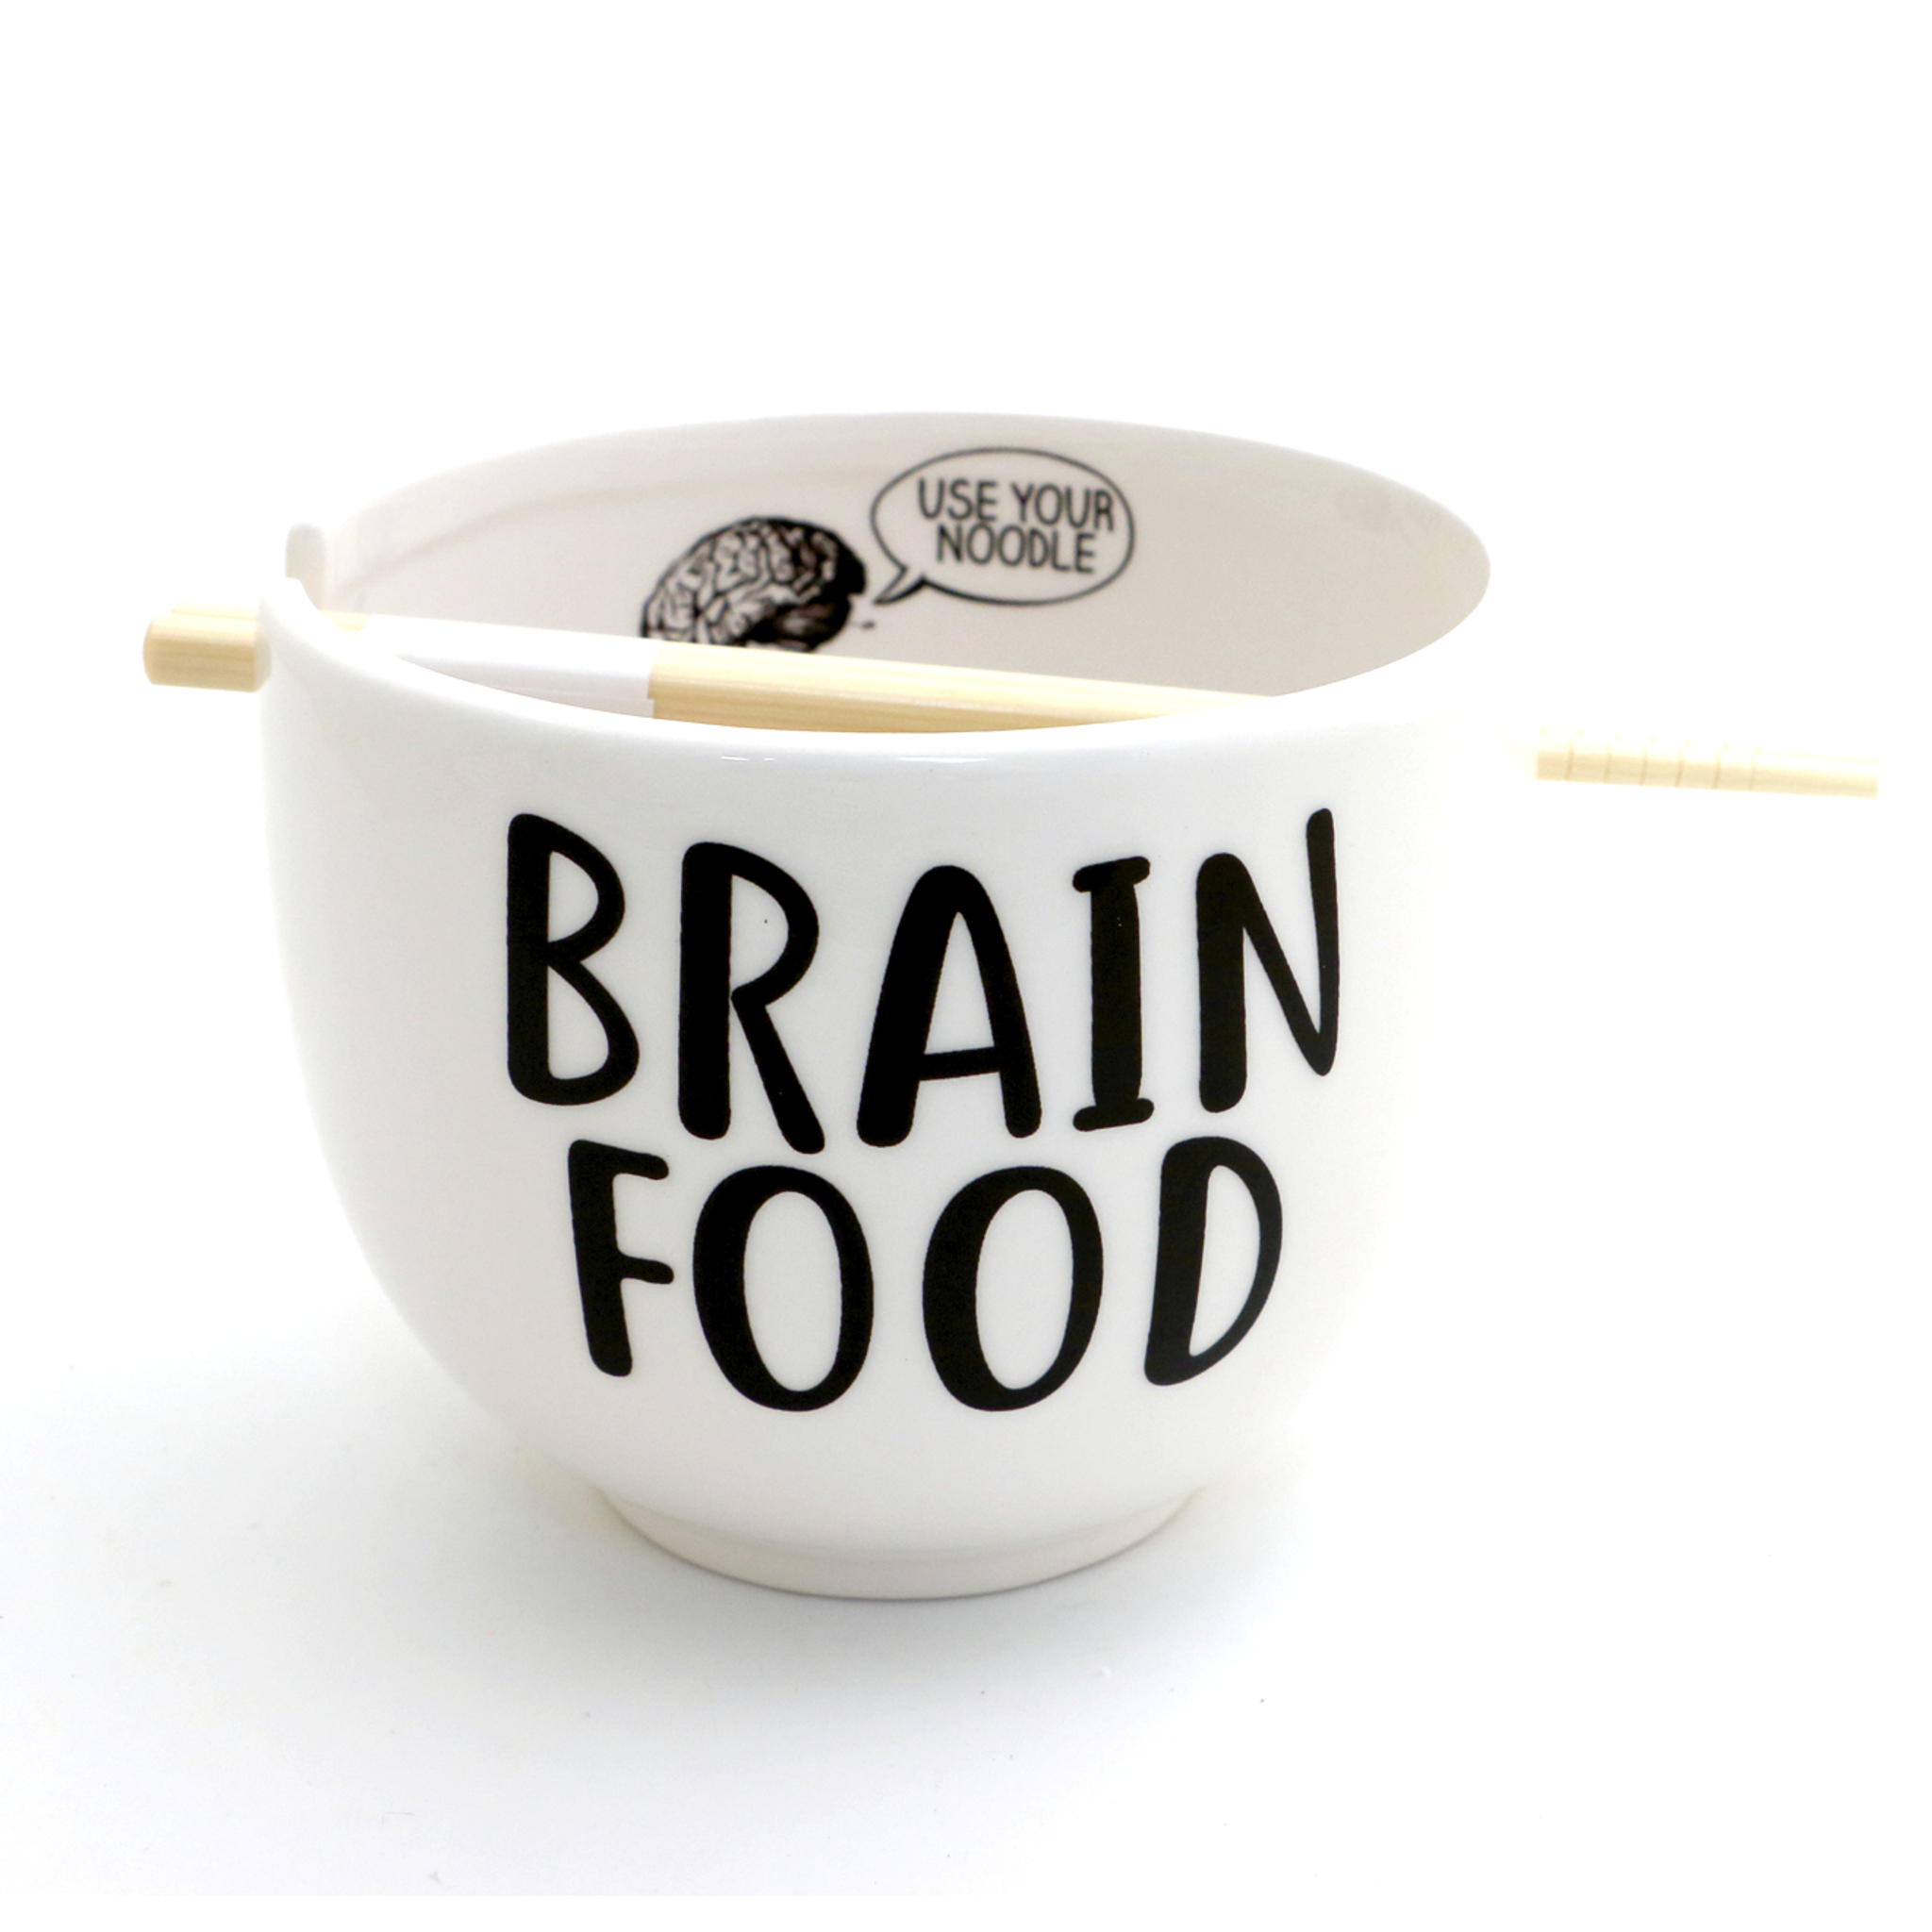 Brain Food Chopstick Bowl, Use Your Noodle, funny ramen bowl -  LennyMudWholesale